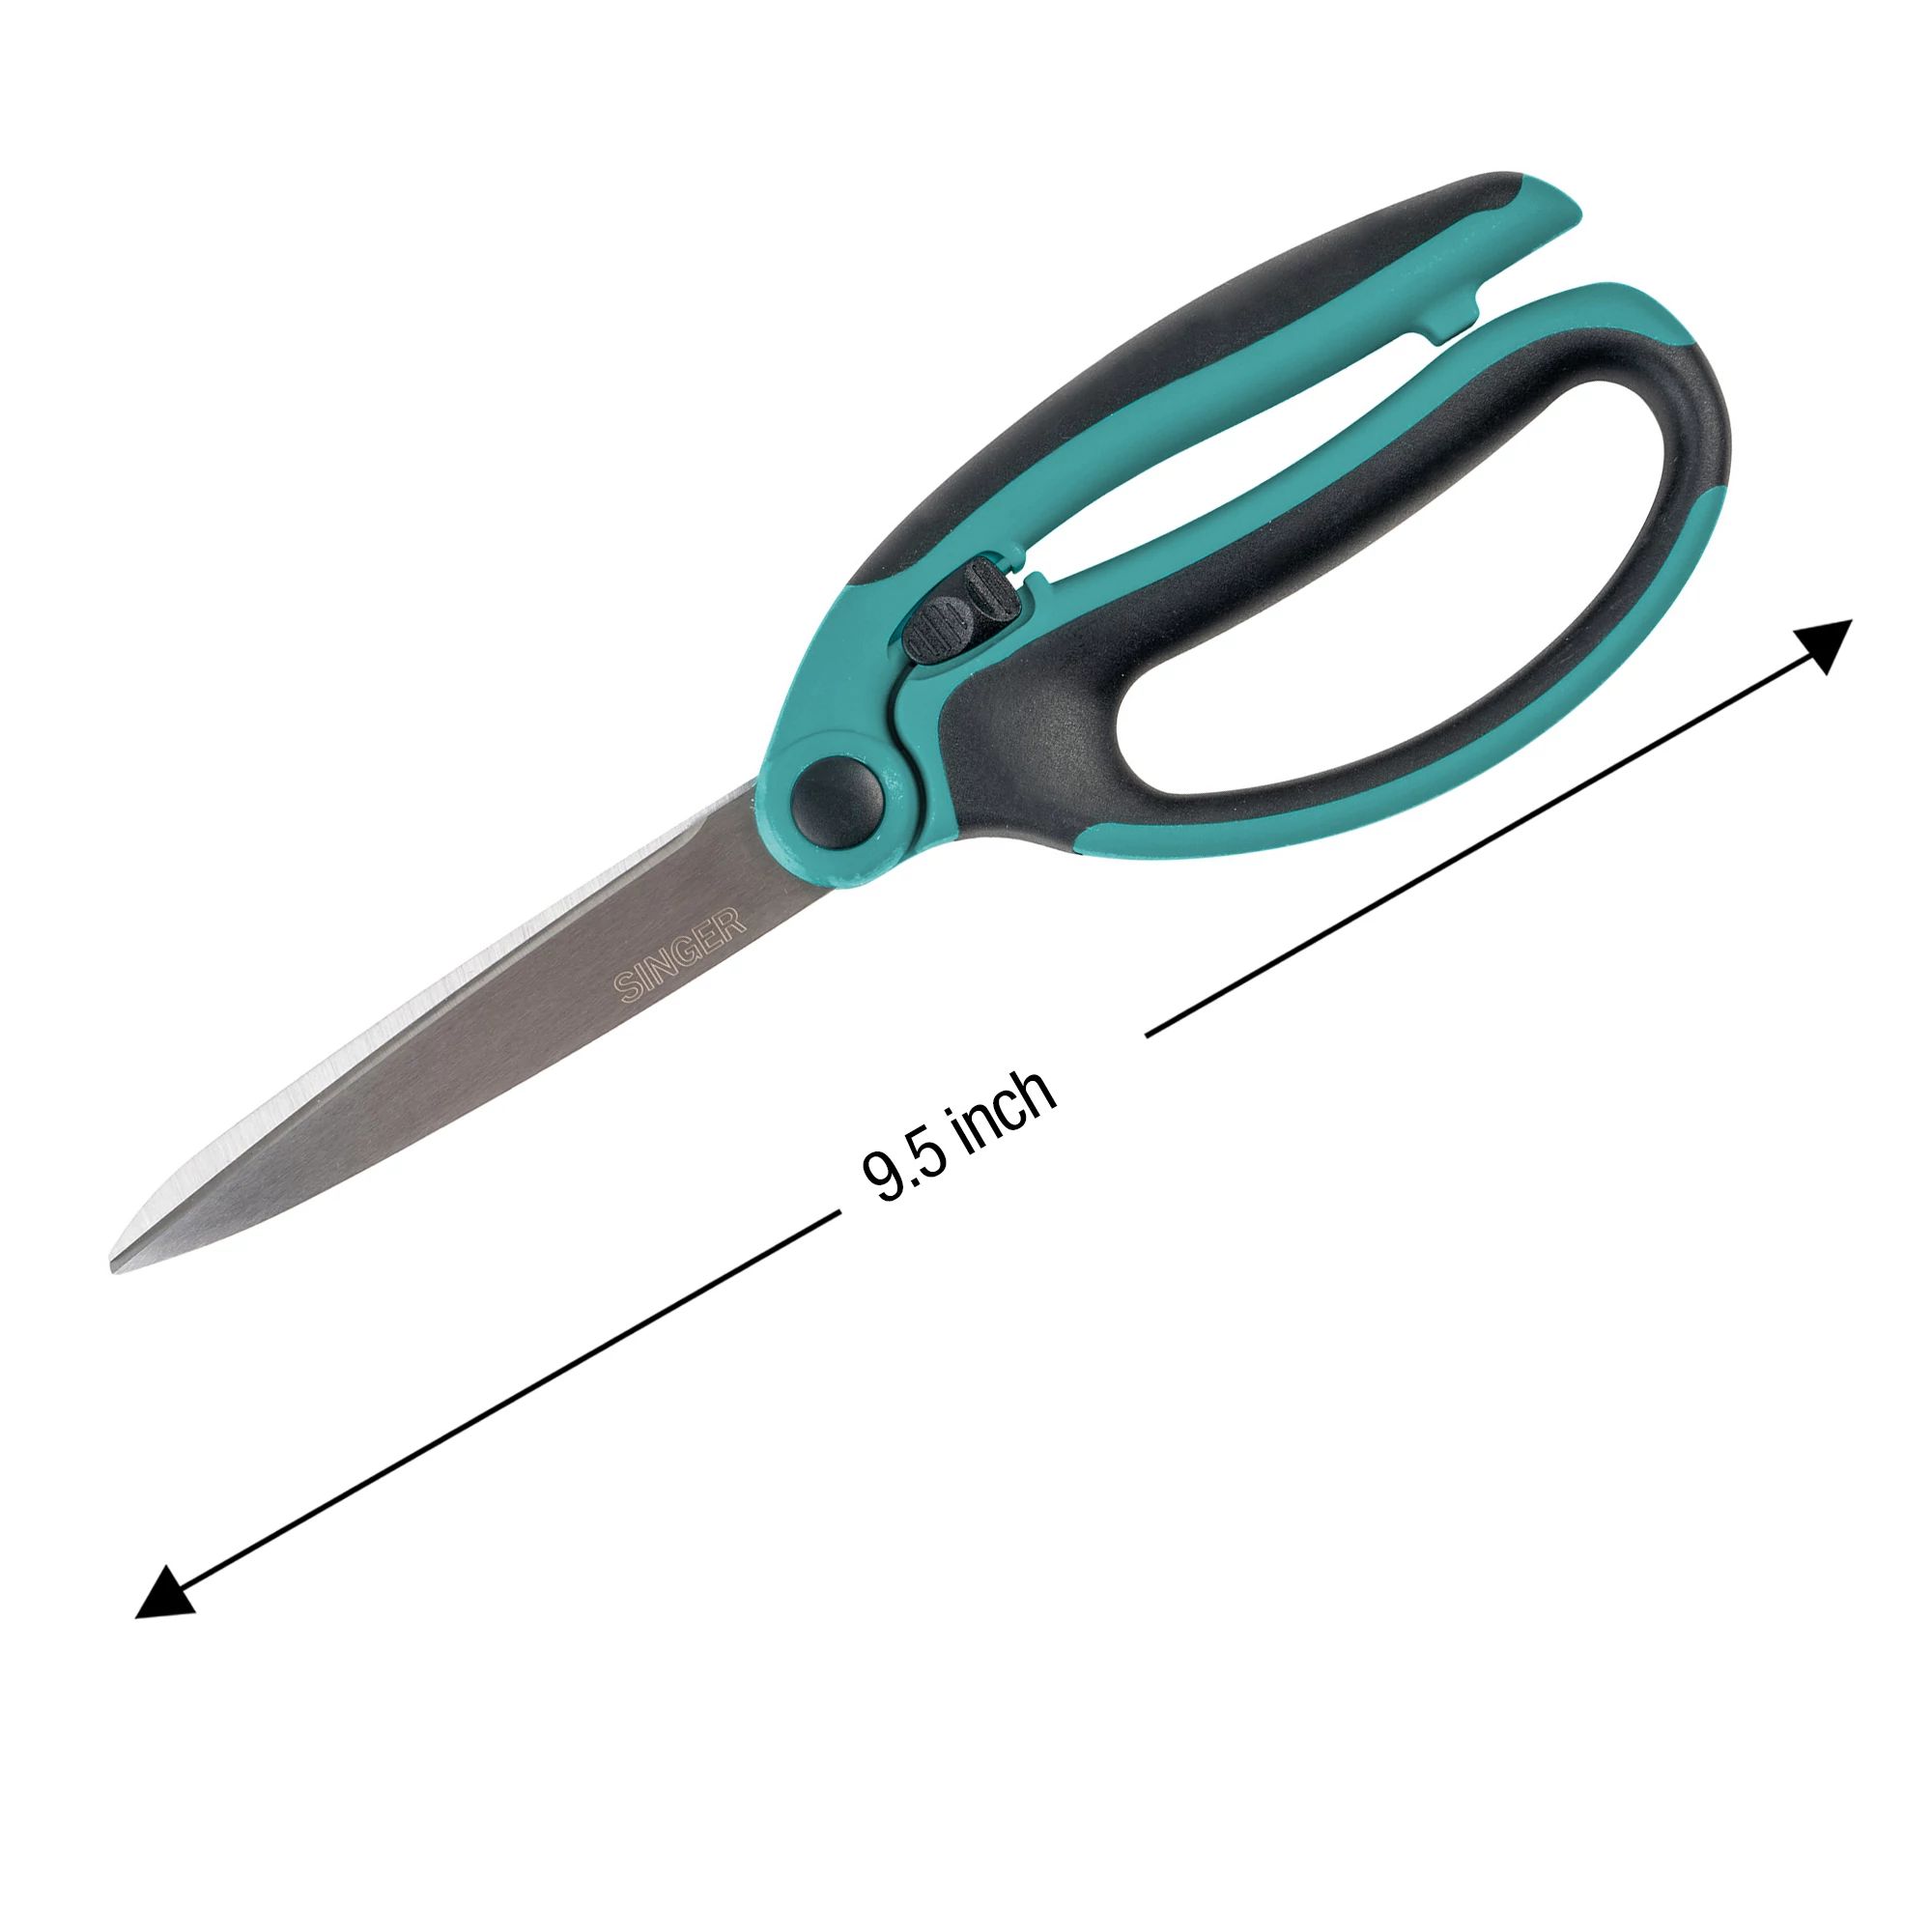 SINGER 9.5" ProSeries™ Spring Assist Scissor with Comfort Grip